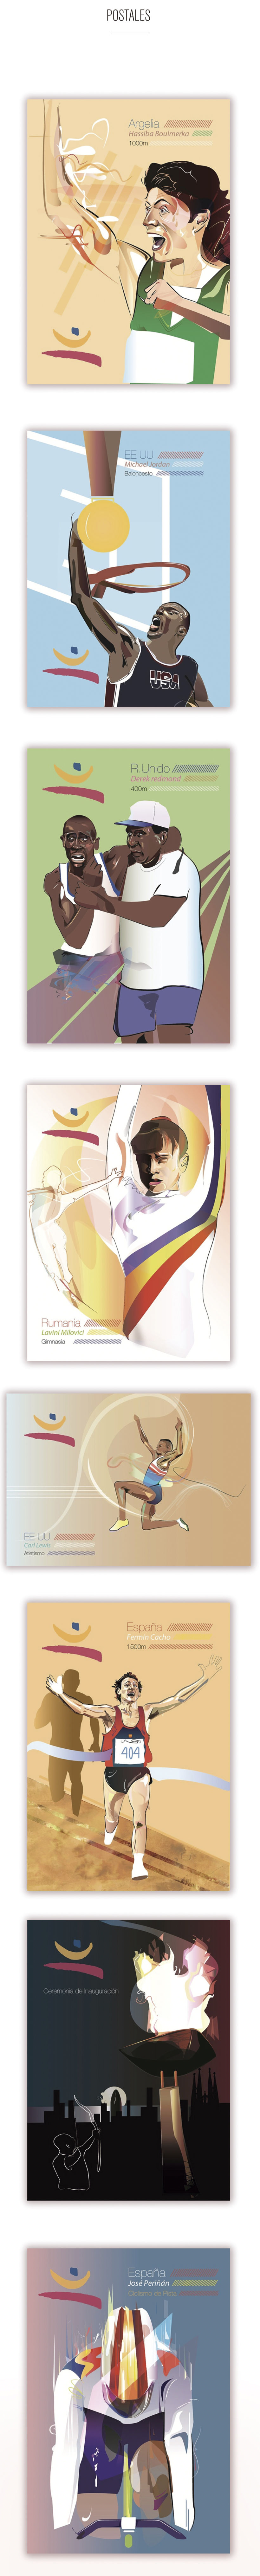 Postales Ilustradas - 20 aniversario de los JJOO Barcelona 92 1